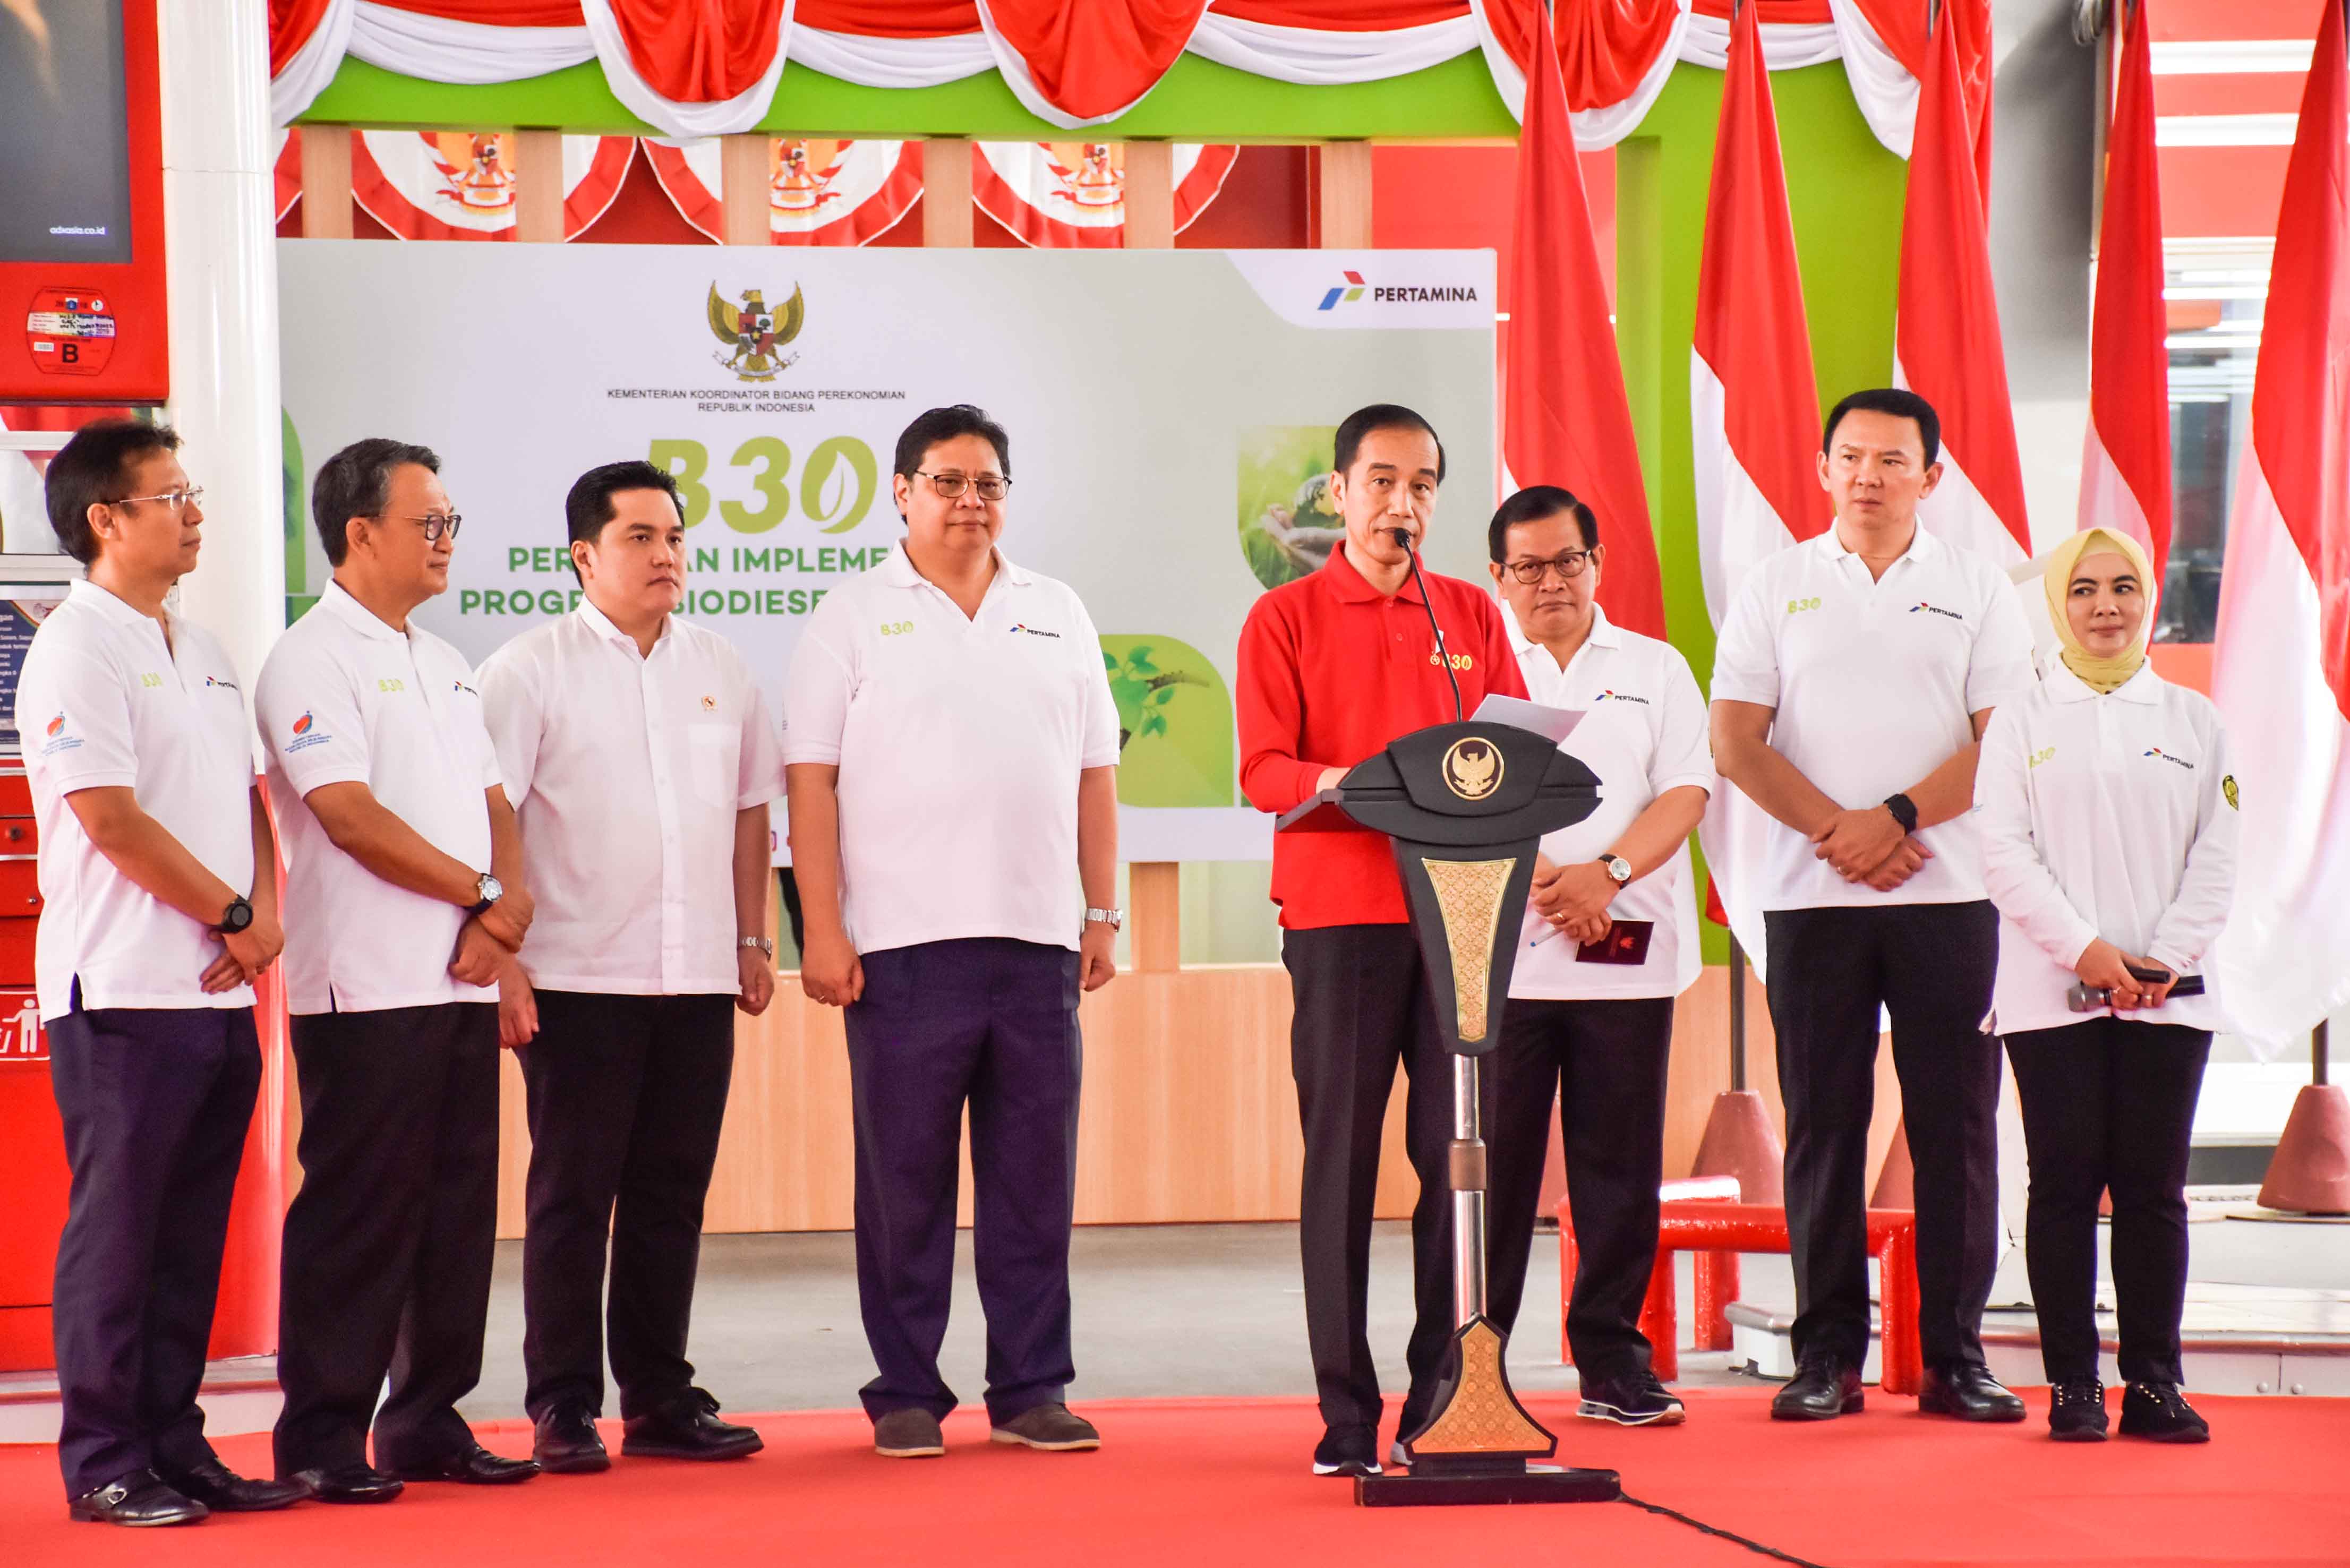 Presiden Indonesia Joko Widodo meresmikan implementasi program biodiesel 30 persen (B30) di SPBU Pertamina Jalan MT Haryono Jakarta Selatan, Senin (23/12/2019).